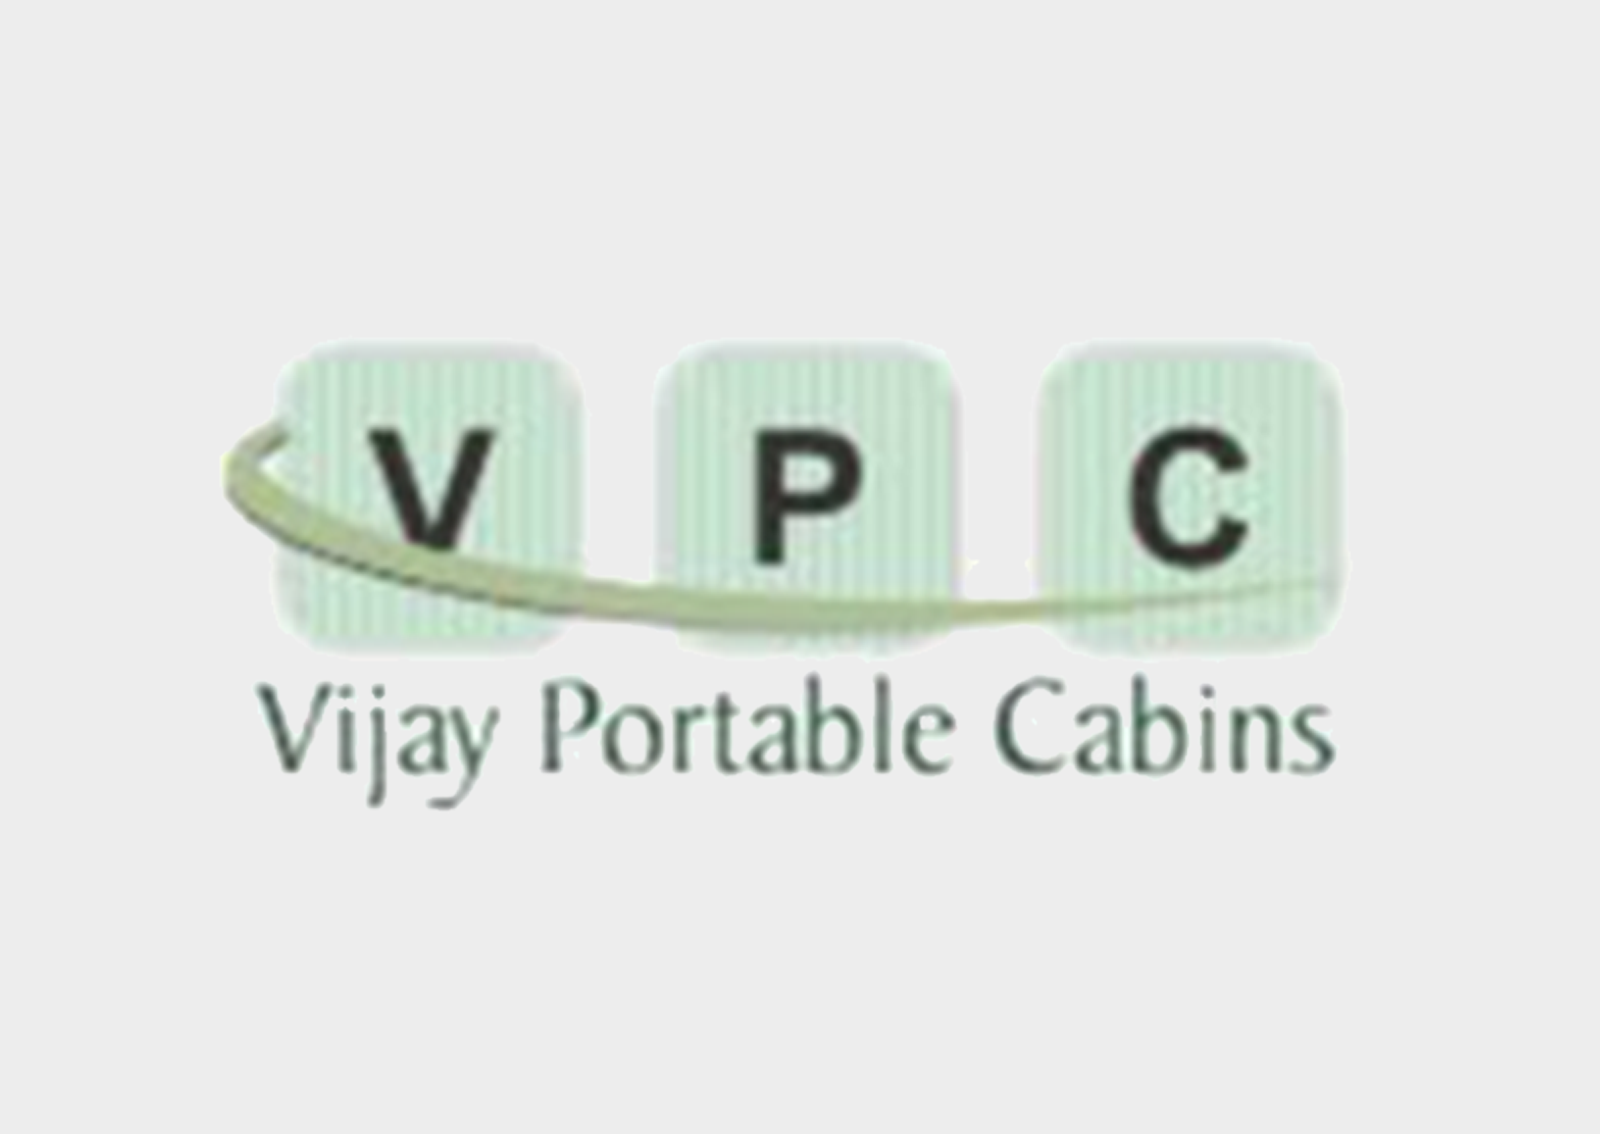 Vijay Portables